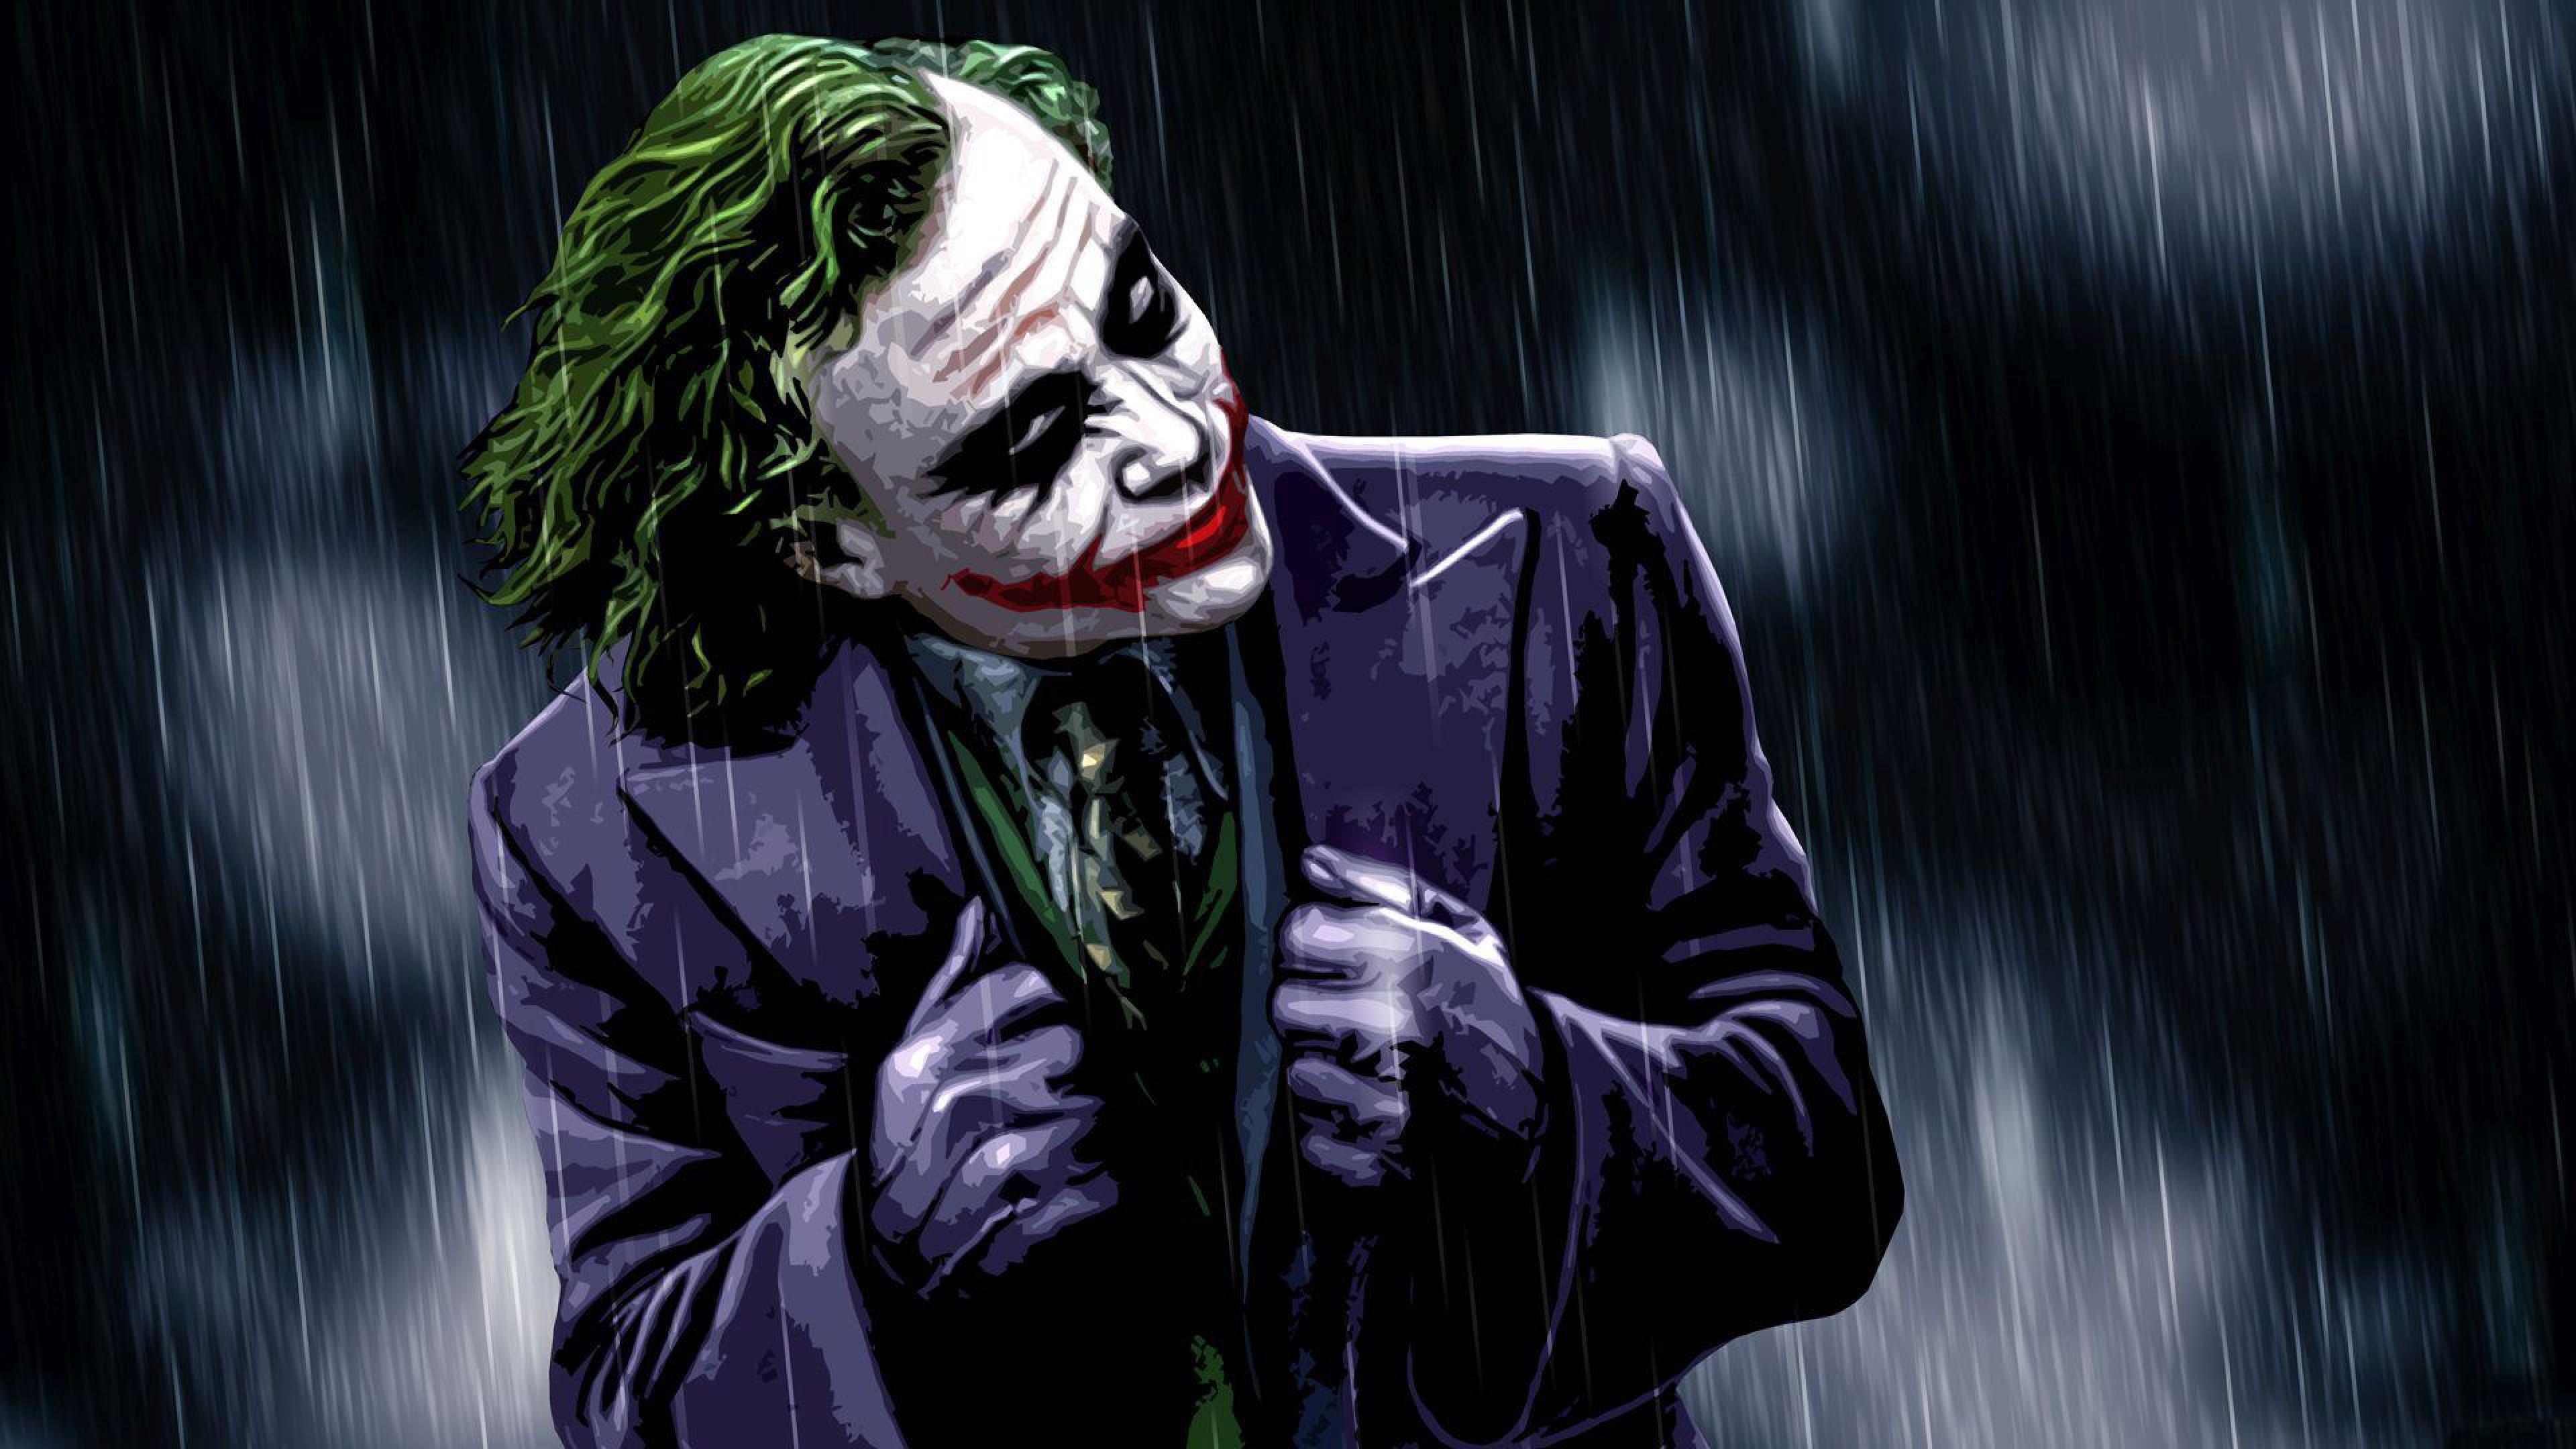 The Joker The Dark Knight Desktop Wallpaper Hd For Mobile Phones And